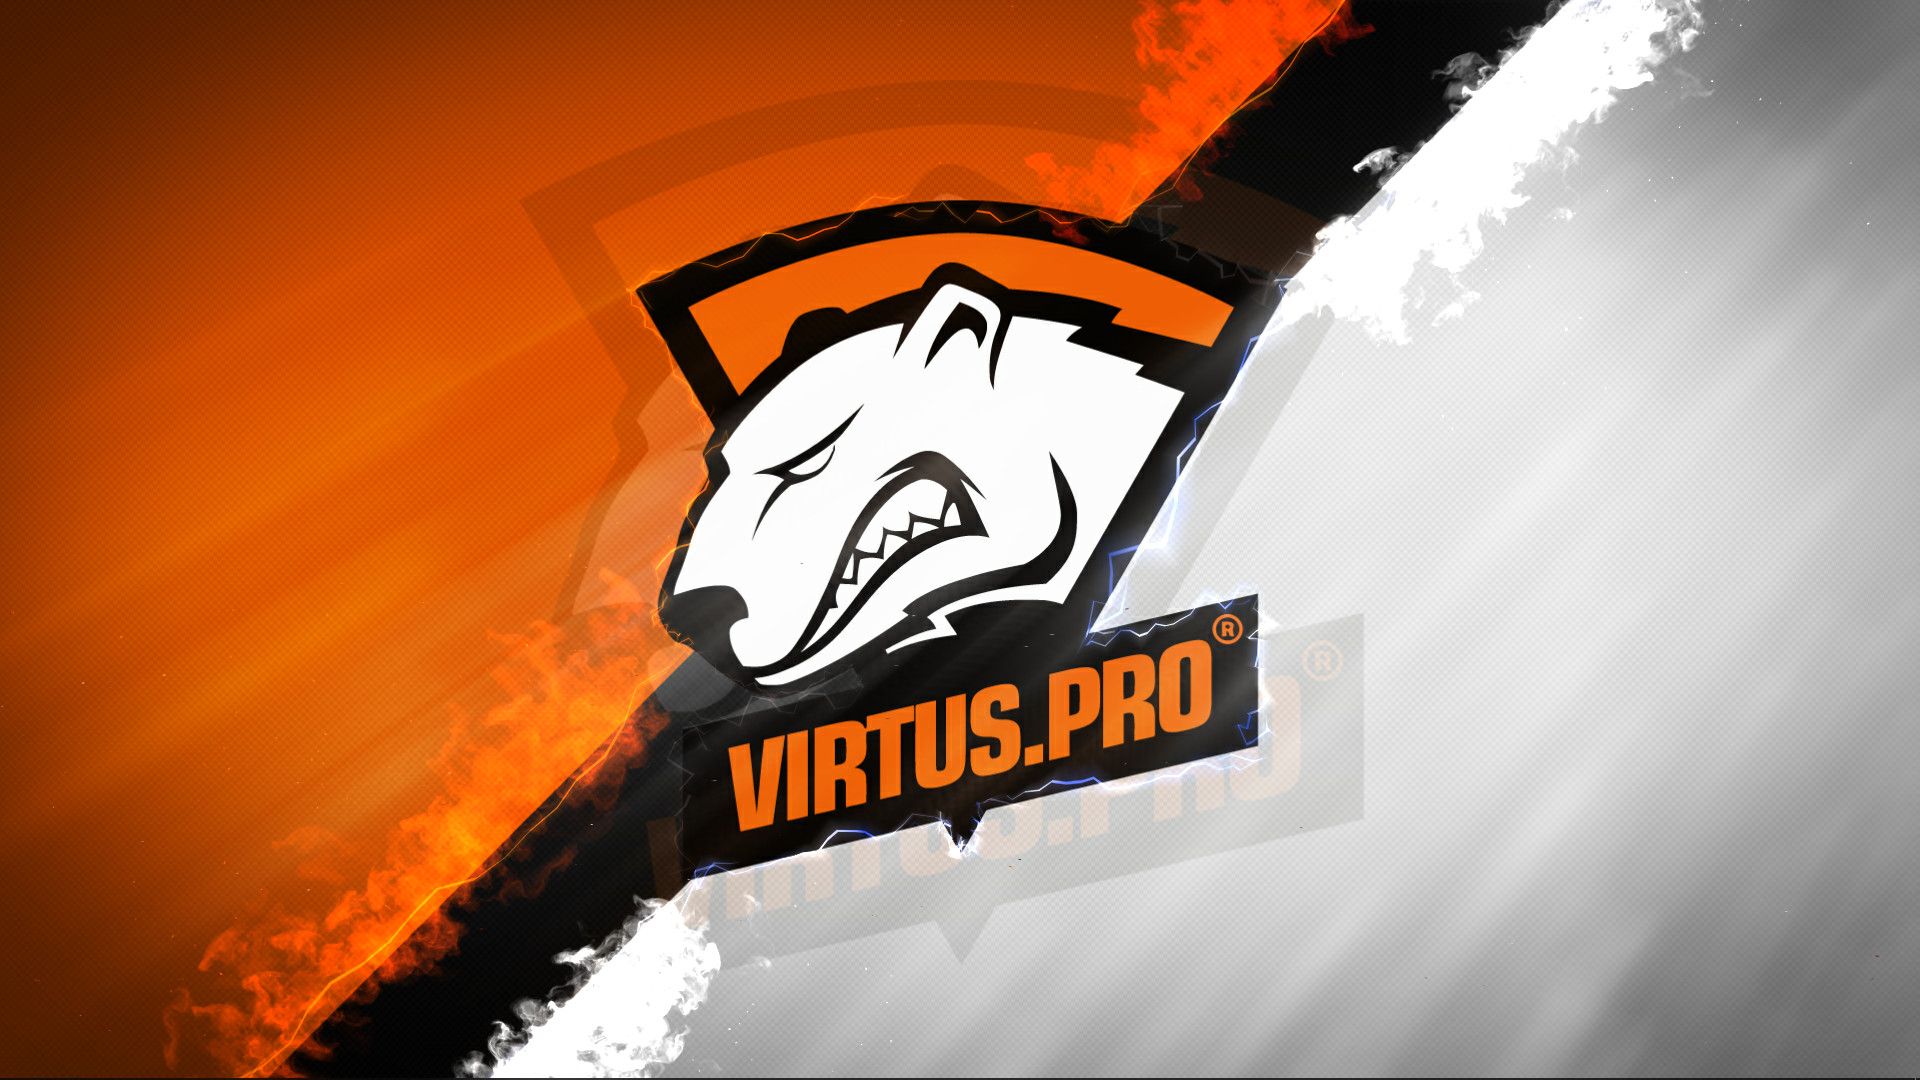 OutSiders переименовалась в Virtus.pro на сайте DPC и в клиенте Dota 2